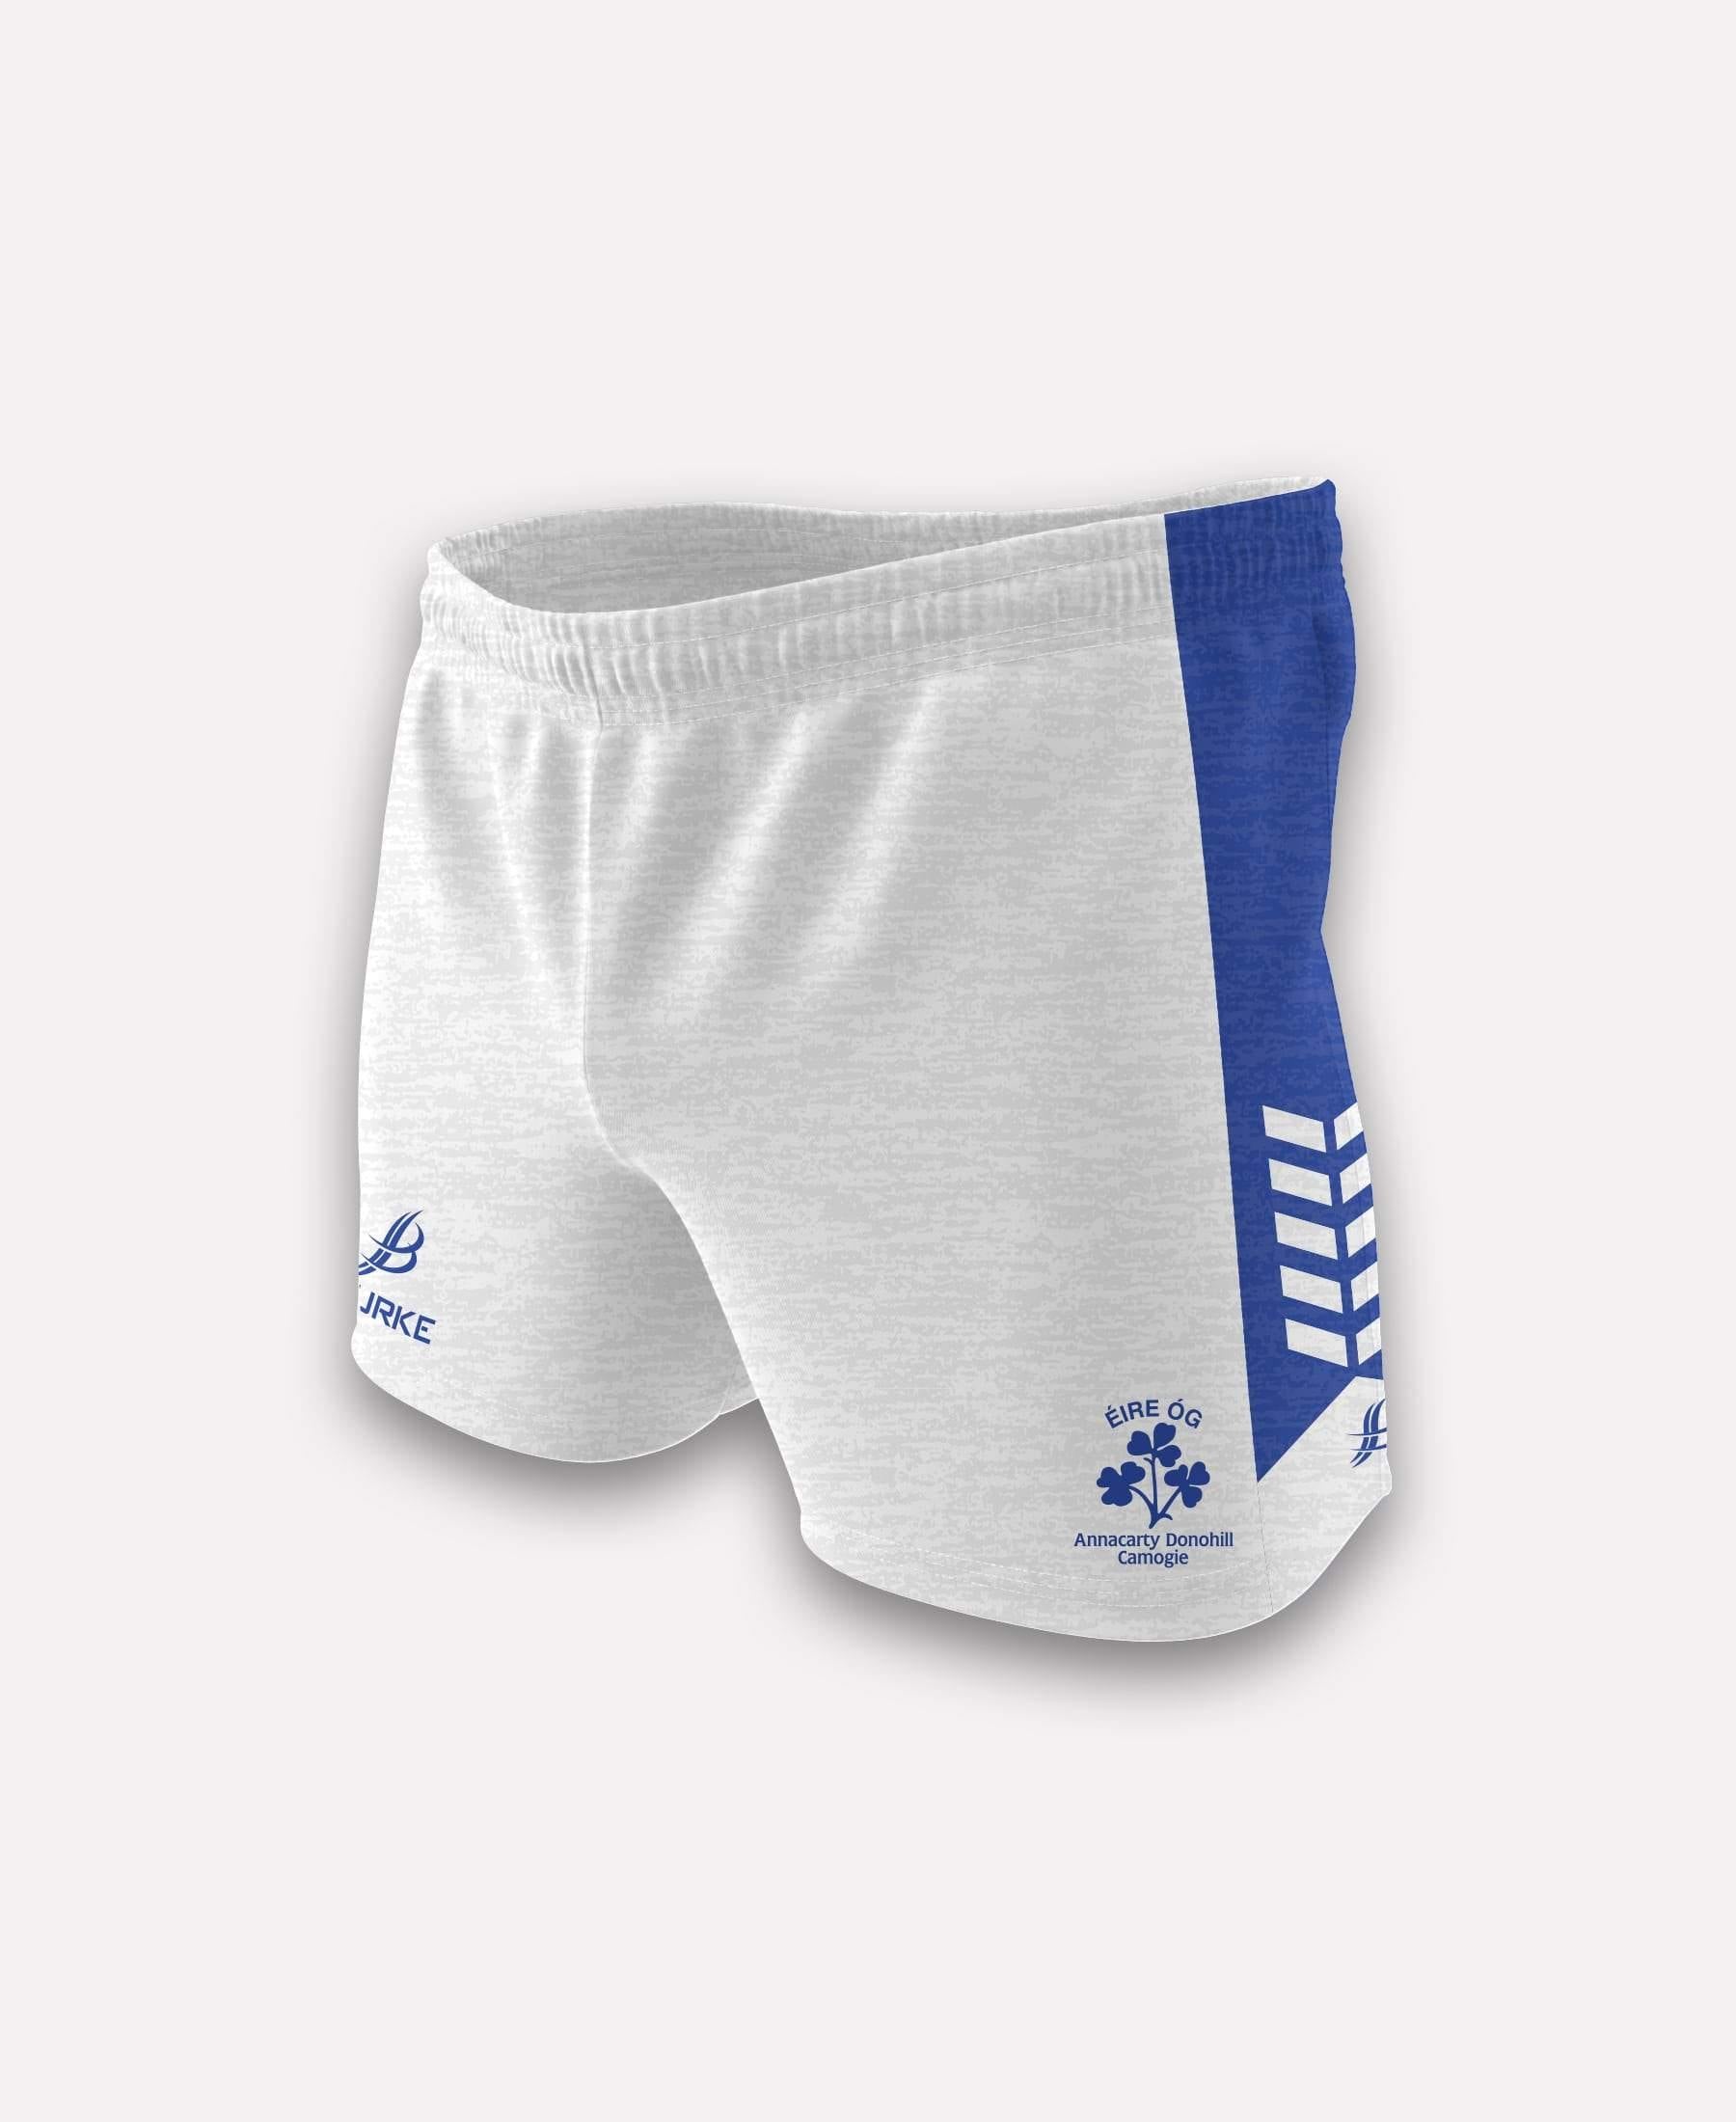 Eire Og Annacarty Donohill Camogie Shorts - Bourke Sports Limited